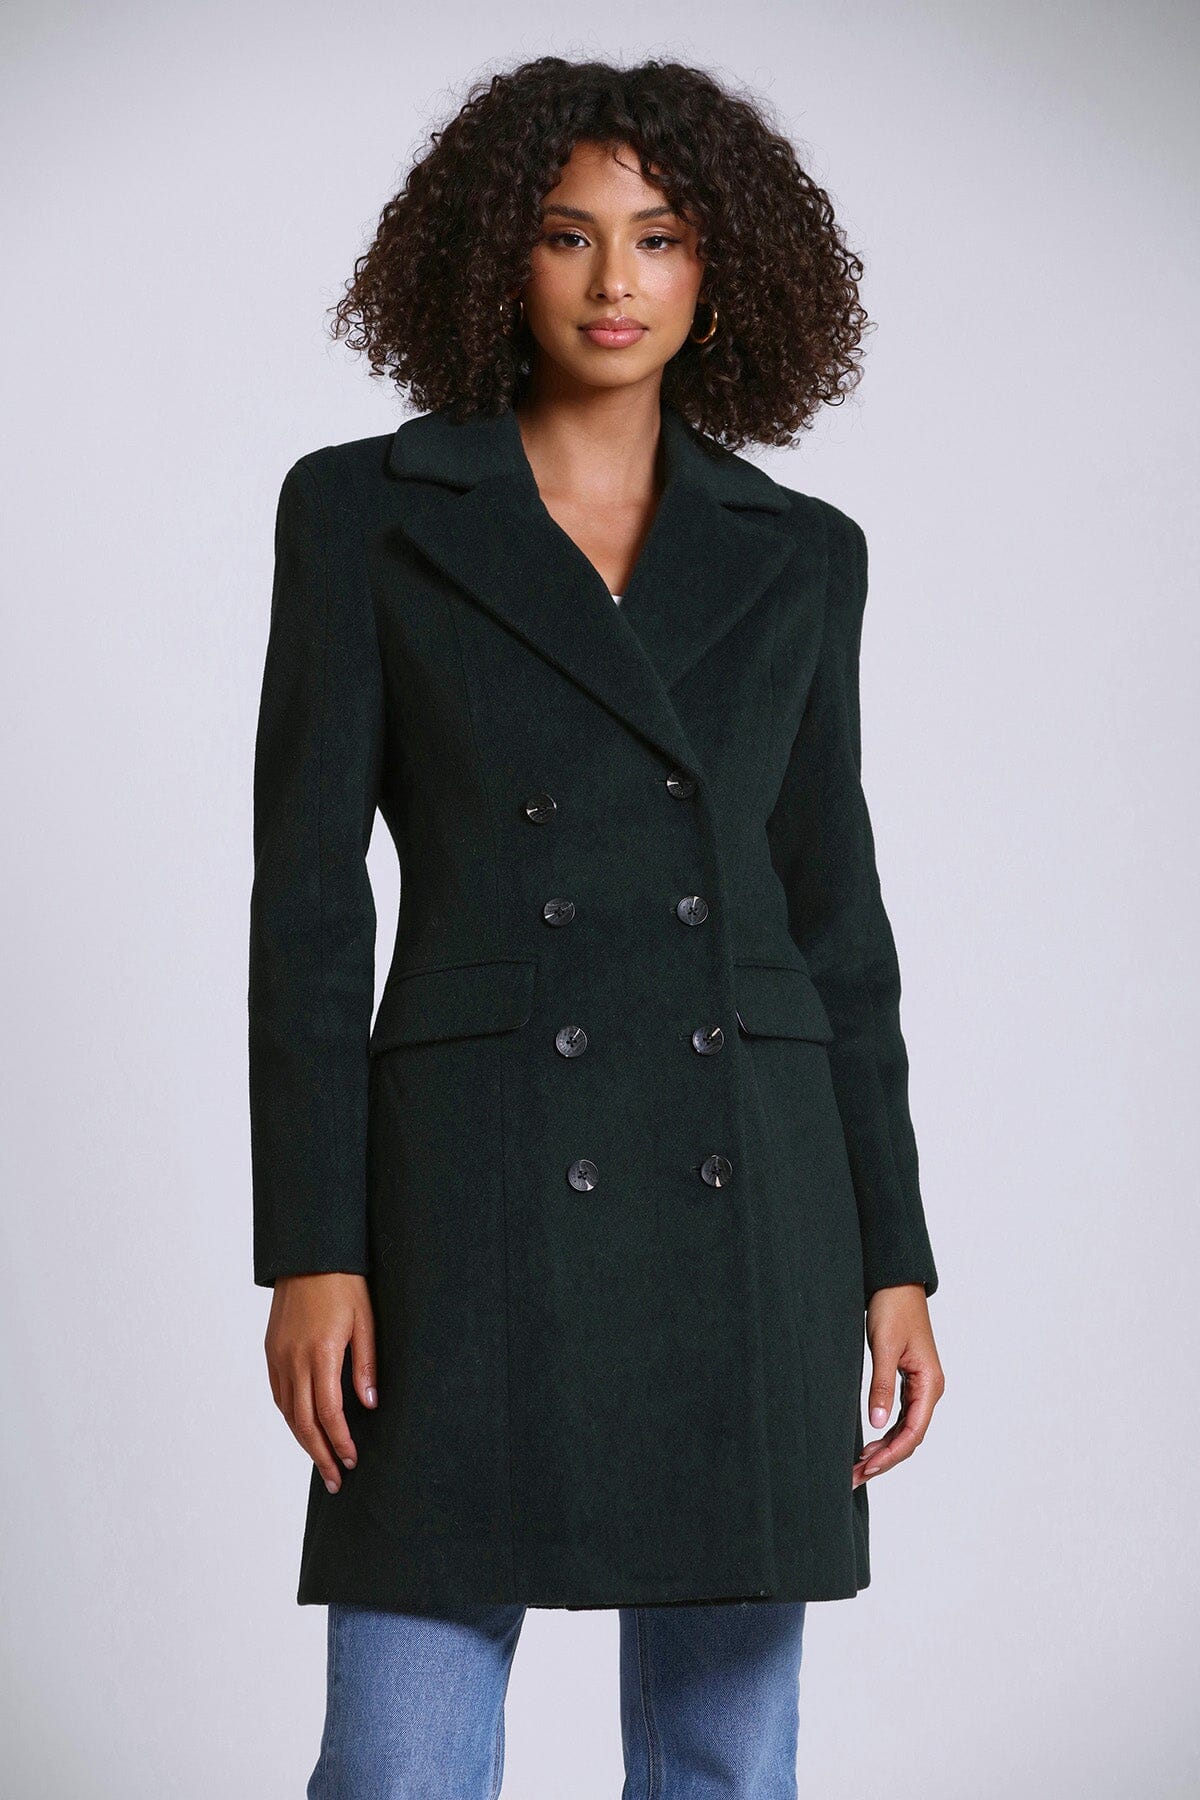 pine green wool blend double breasted coat jacket - women's figure flattering office to date night coats outerwear